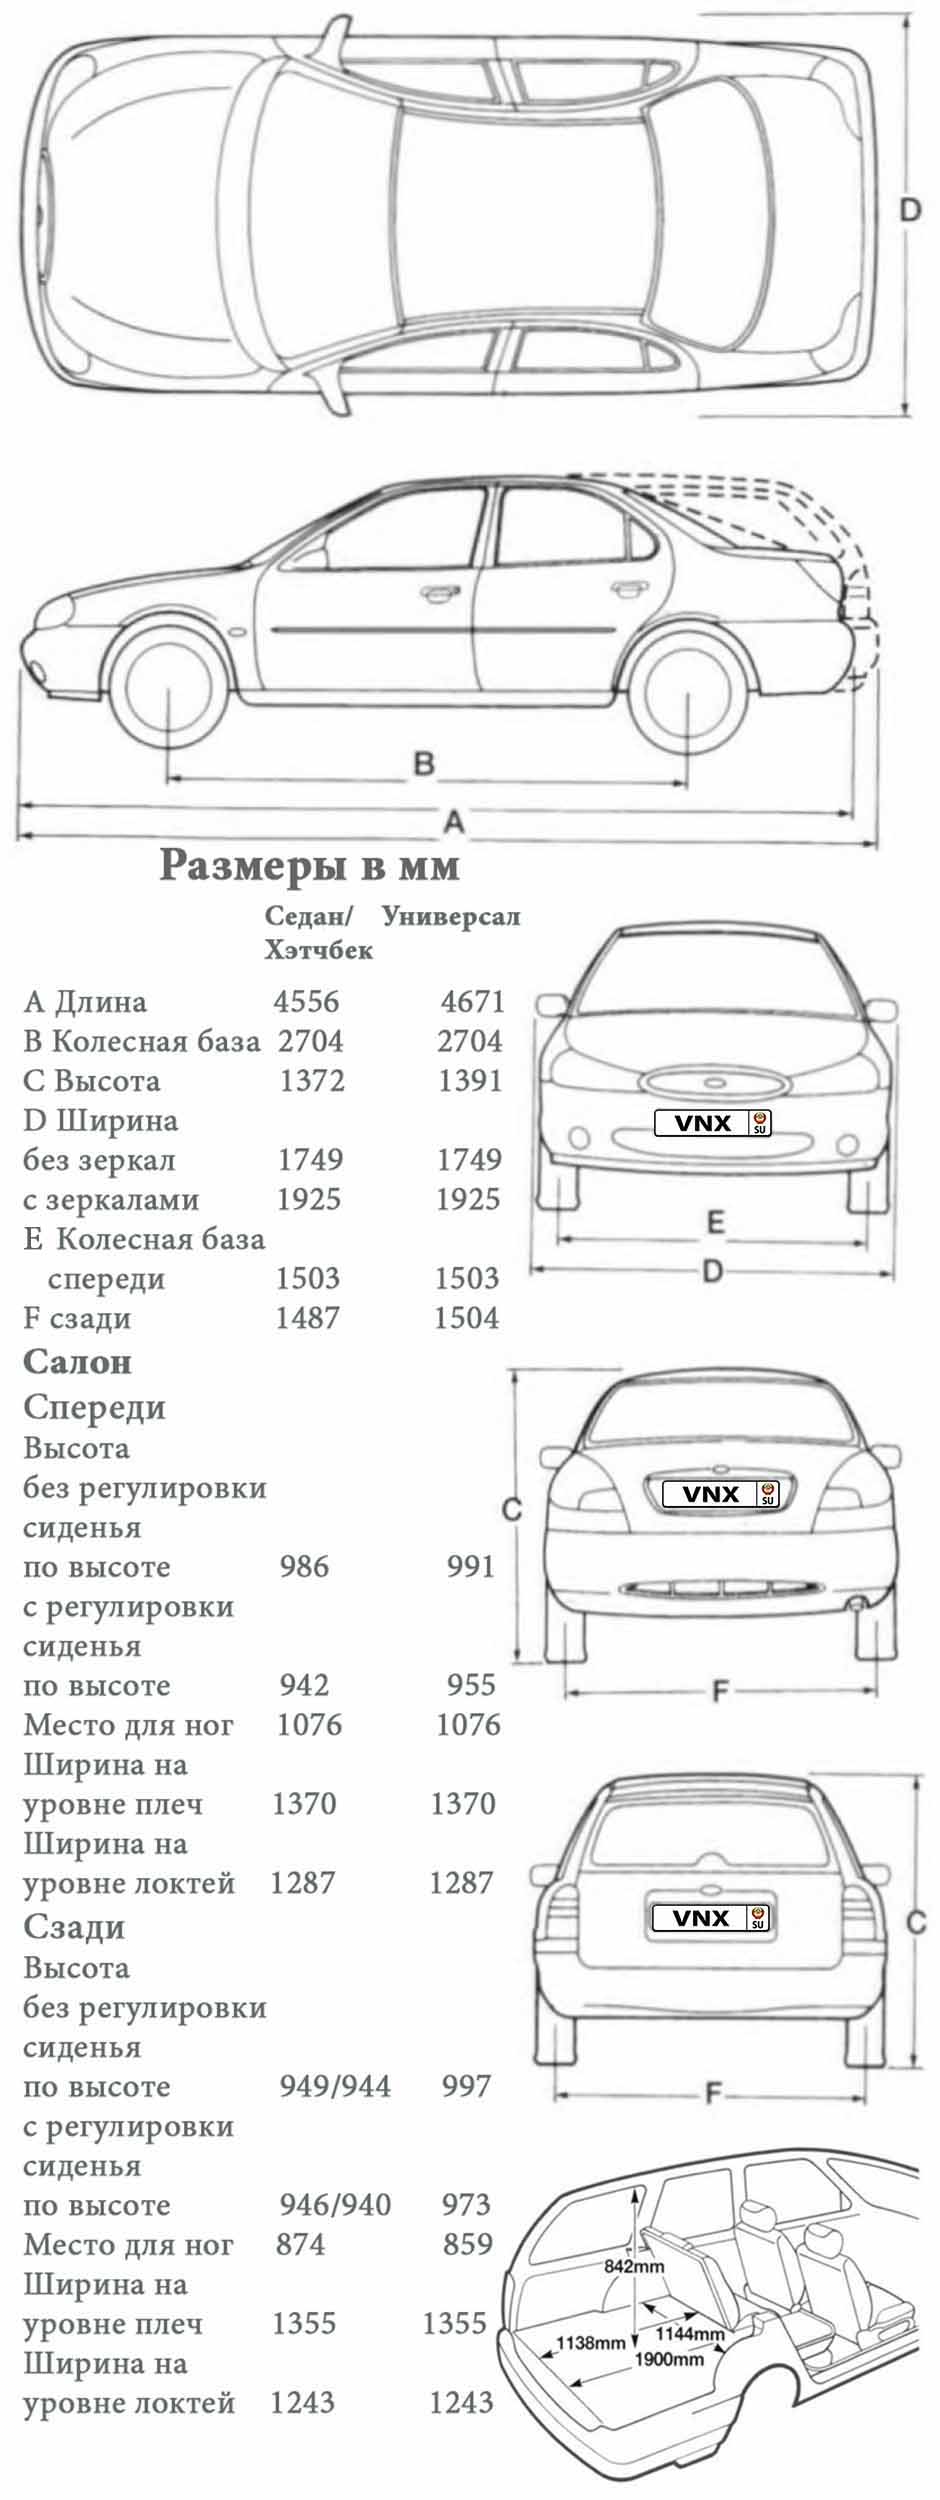 Габаритные размеры Форд Мондео 1996-2000 (dimensions Ford Mondeo II)